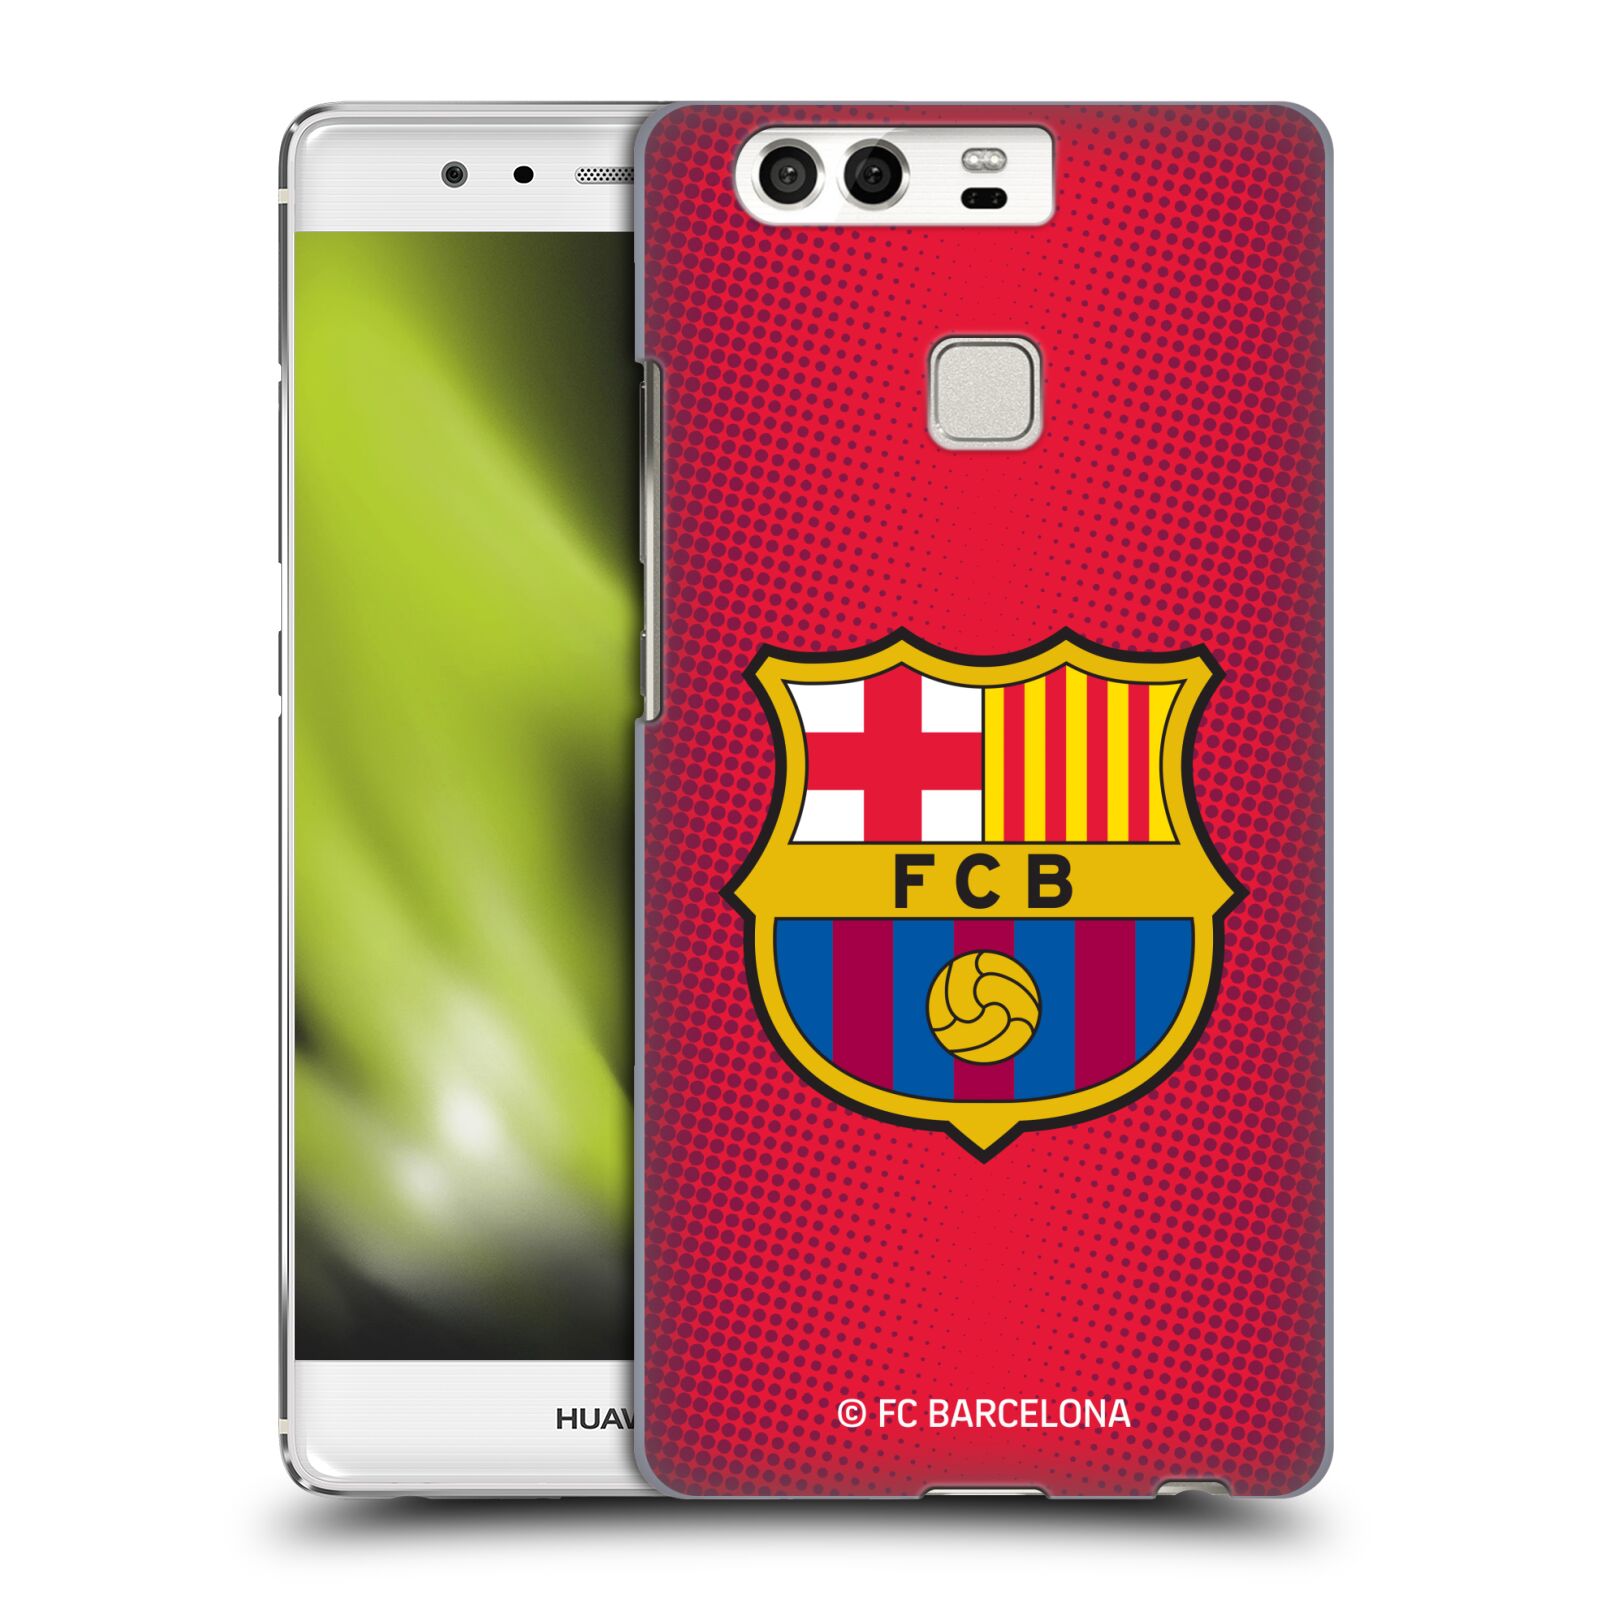 Obal na mobil Huawei P9 / P9 DUAL SIM - HEAD CASE - FC BARCELONA - Velký znak červená a modrá